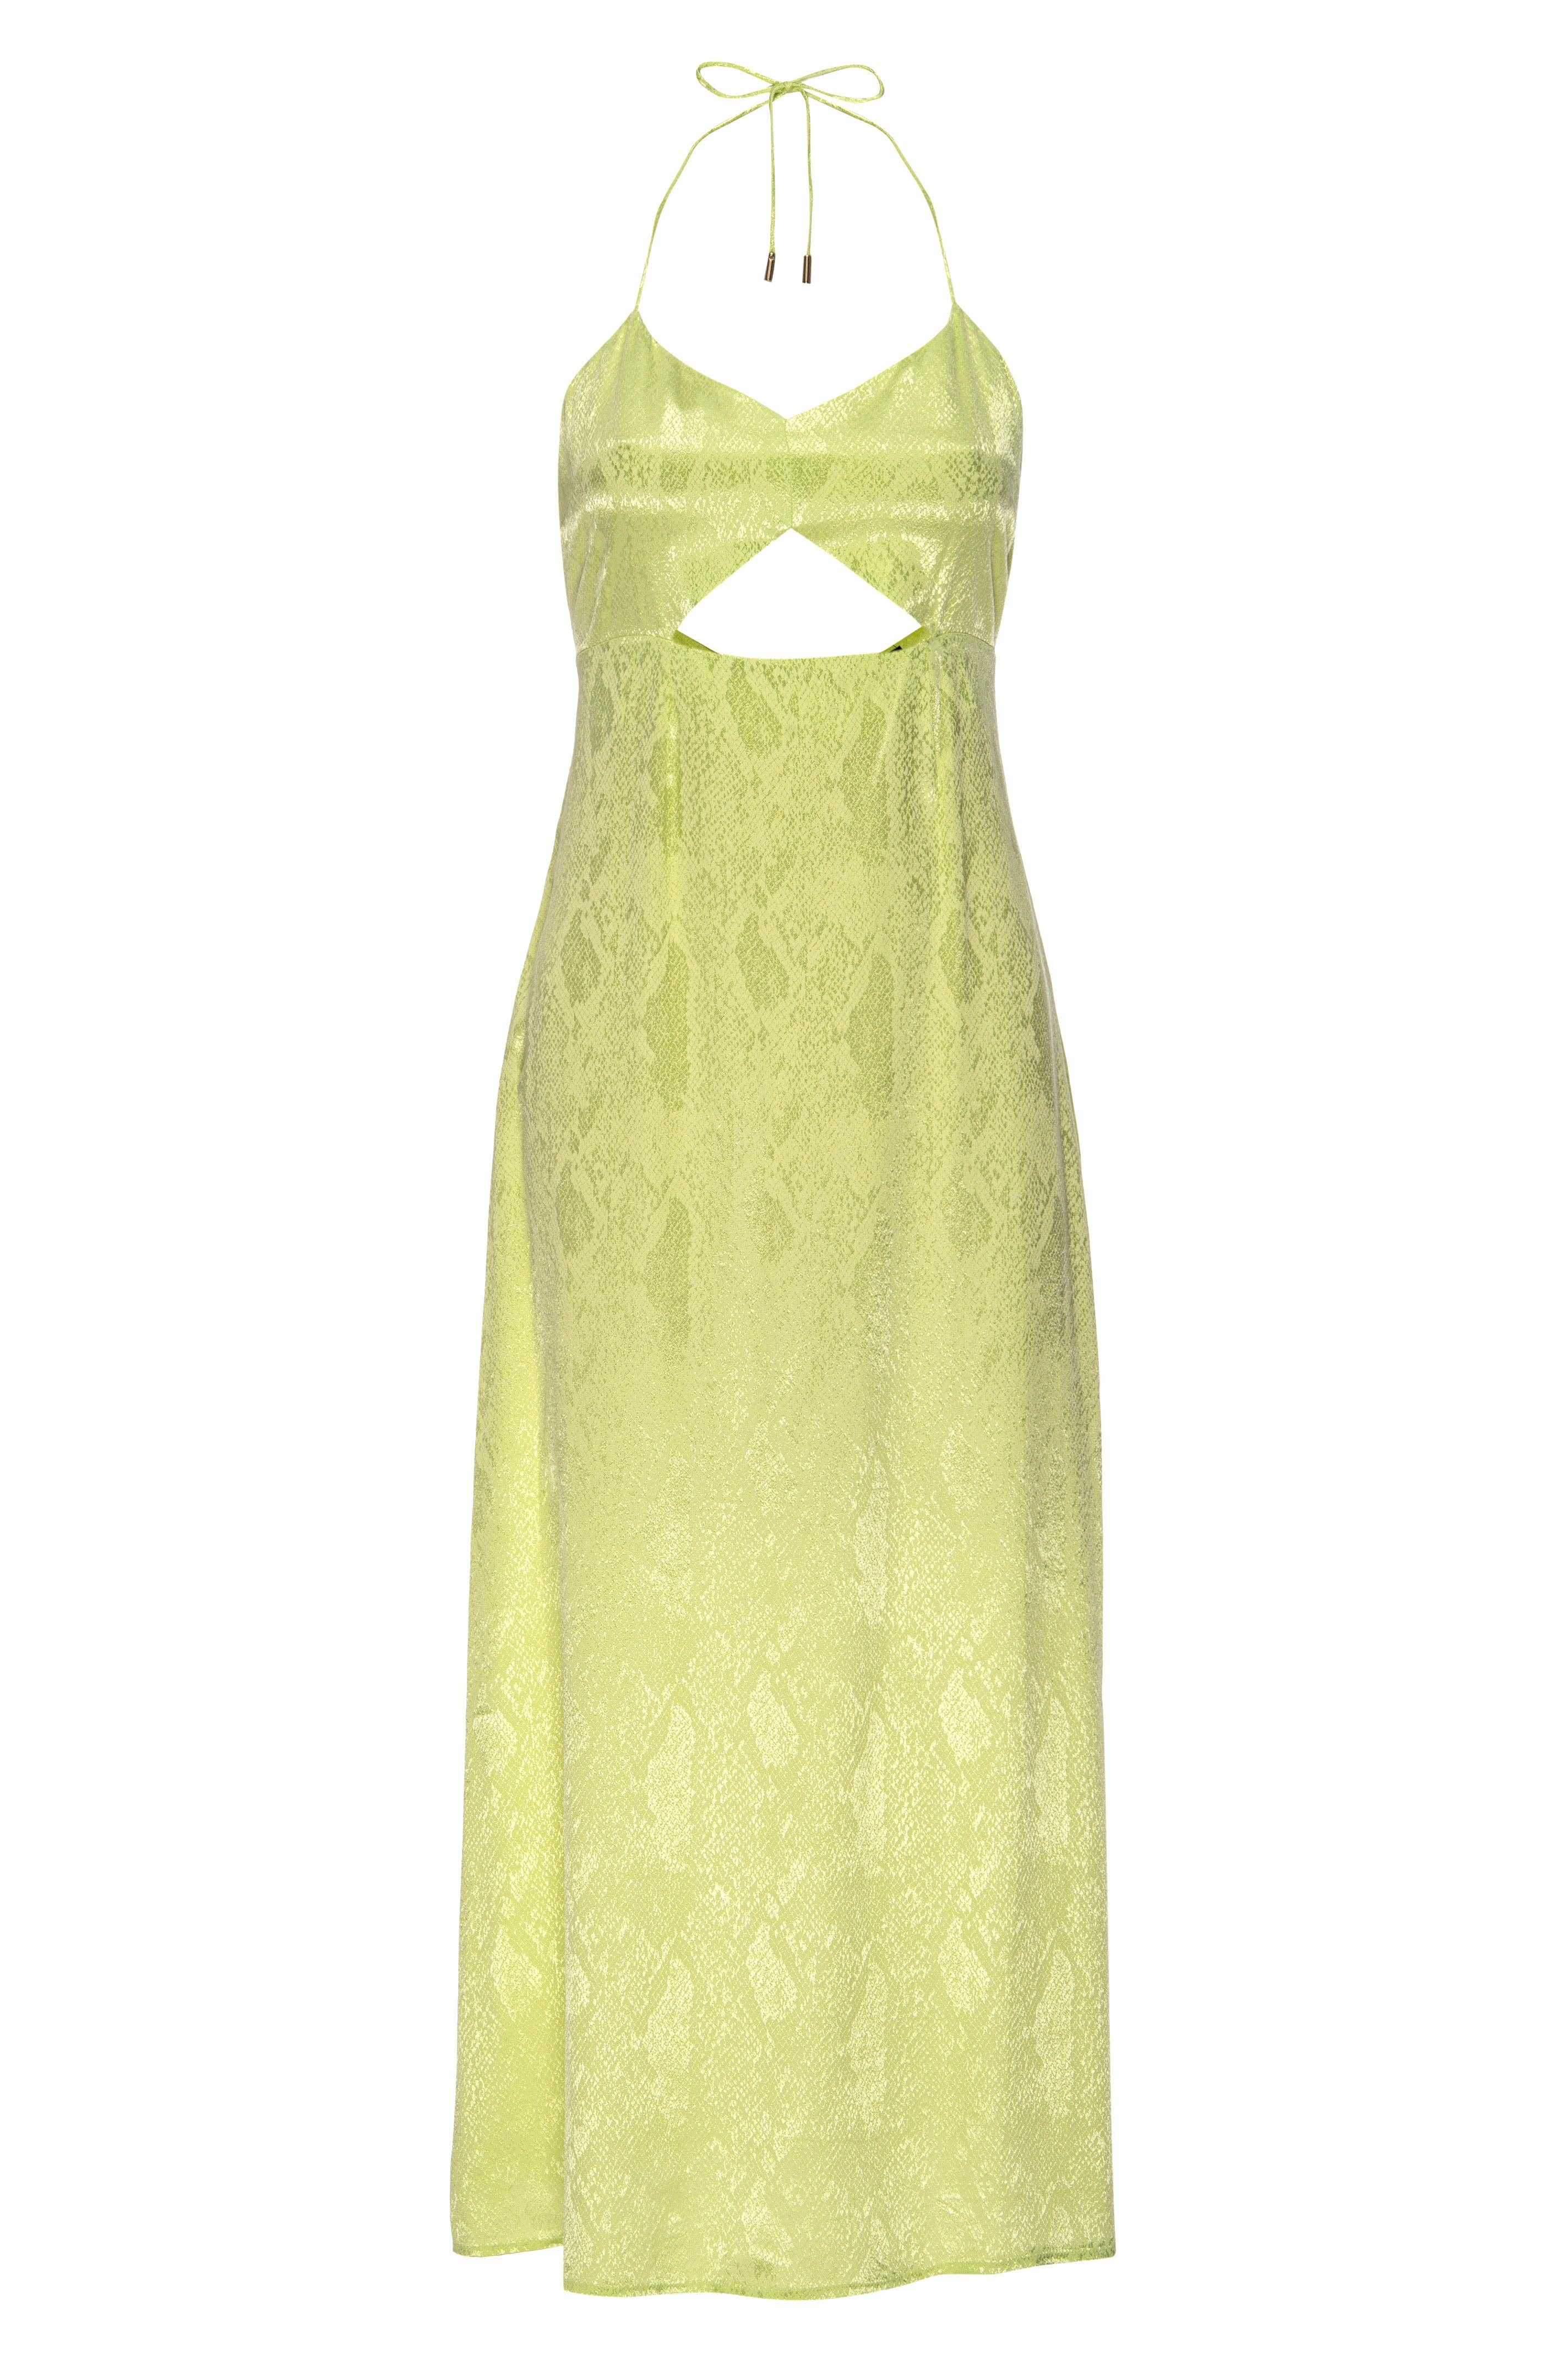 AFRM - Radish Dress - Snake Lime Jacquard